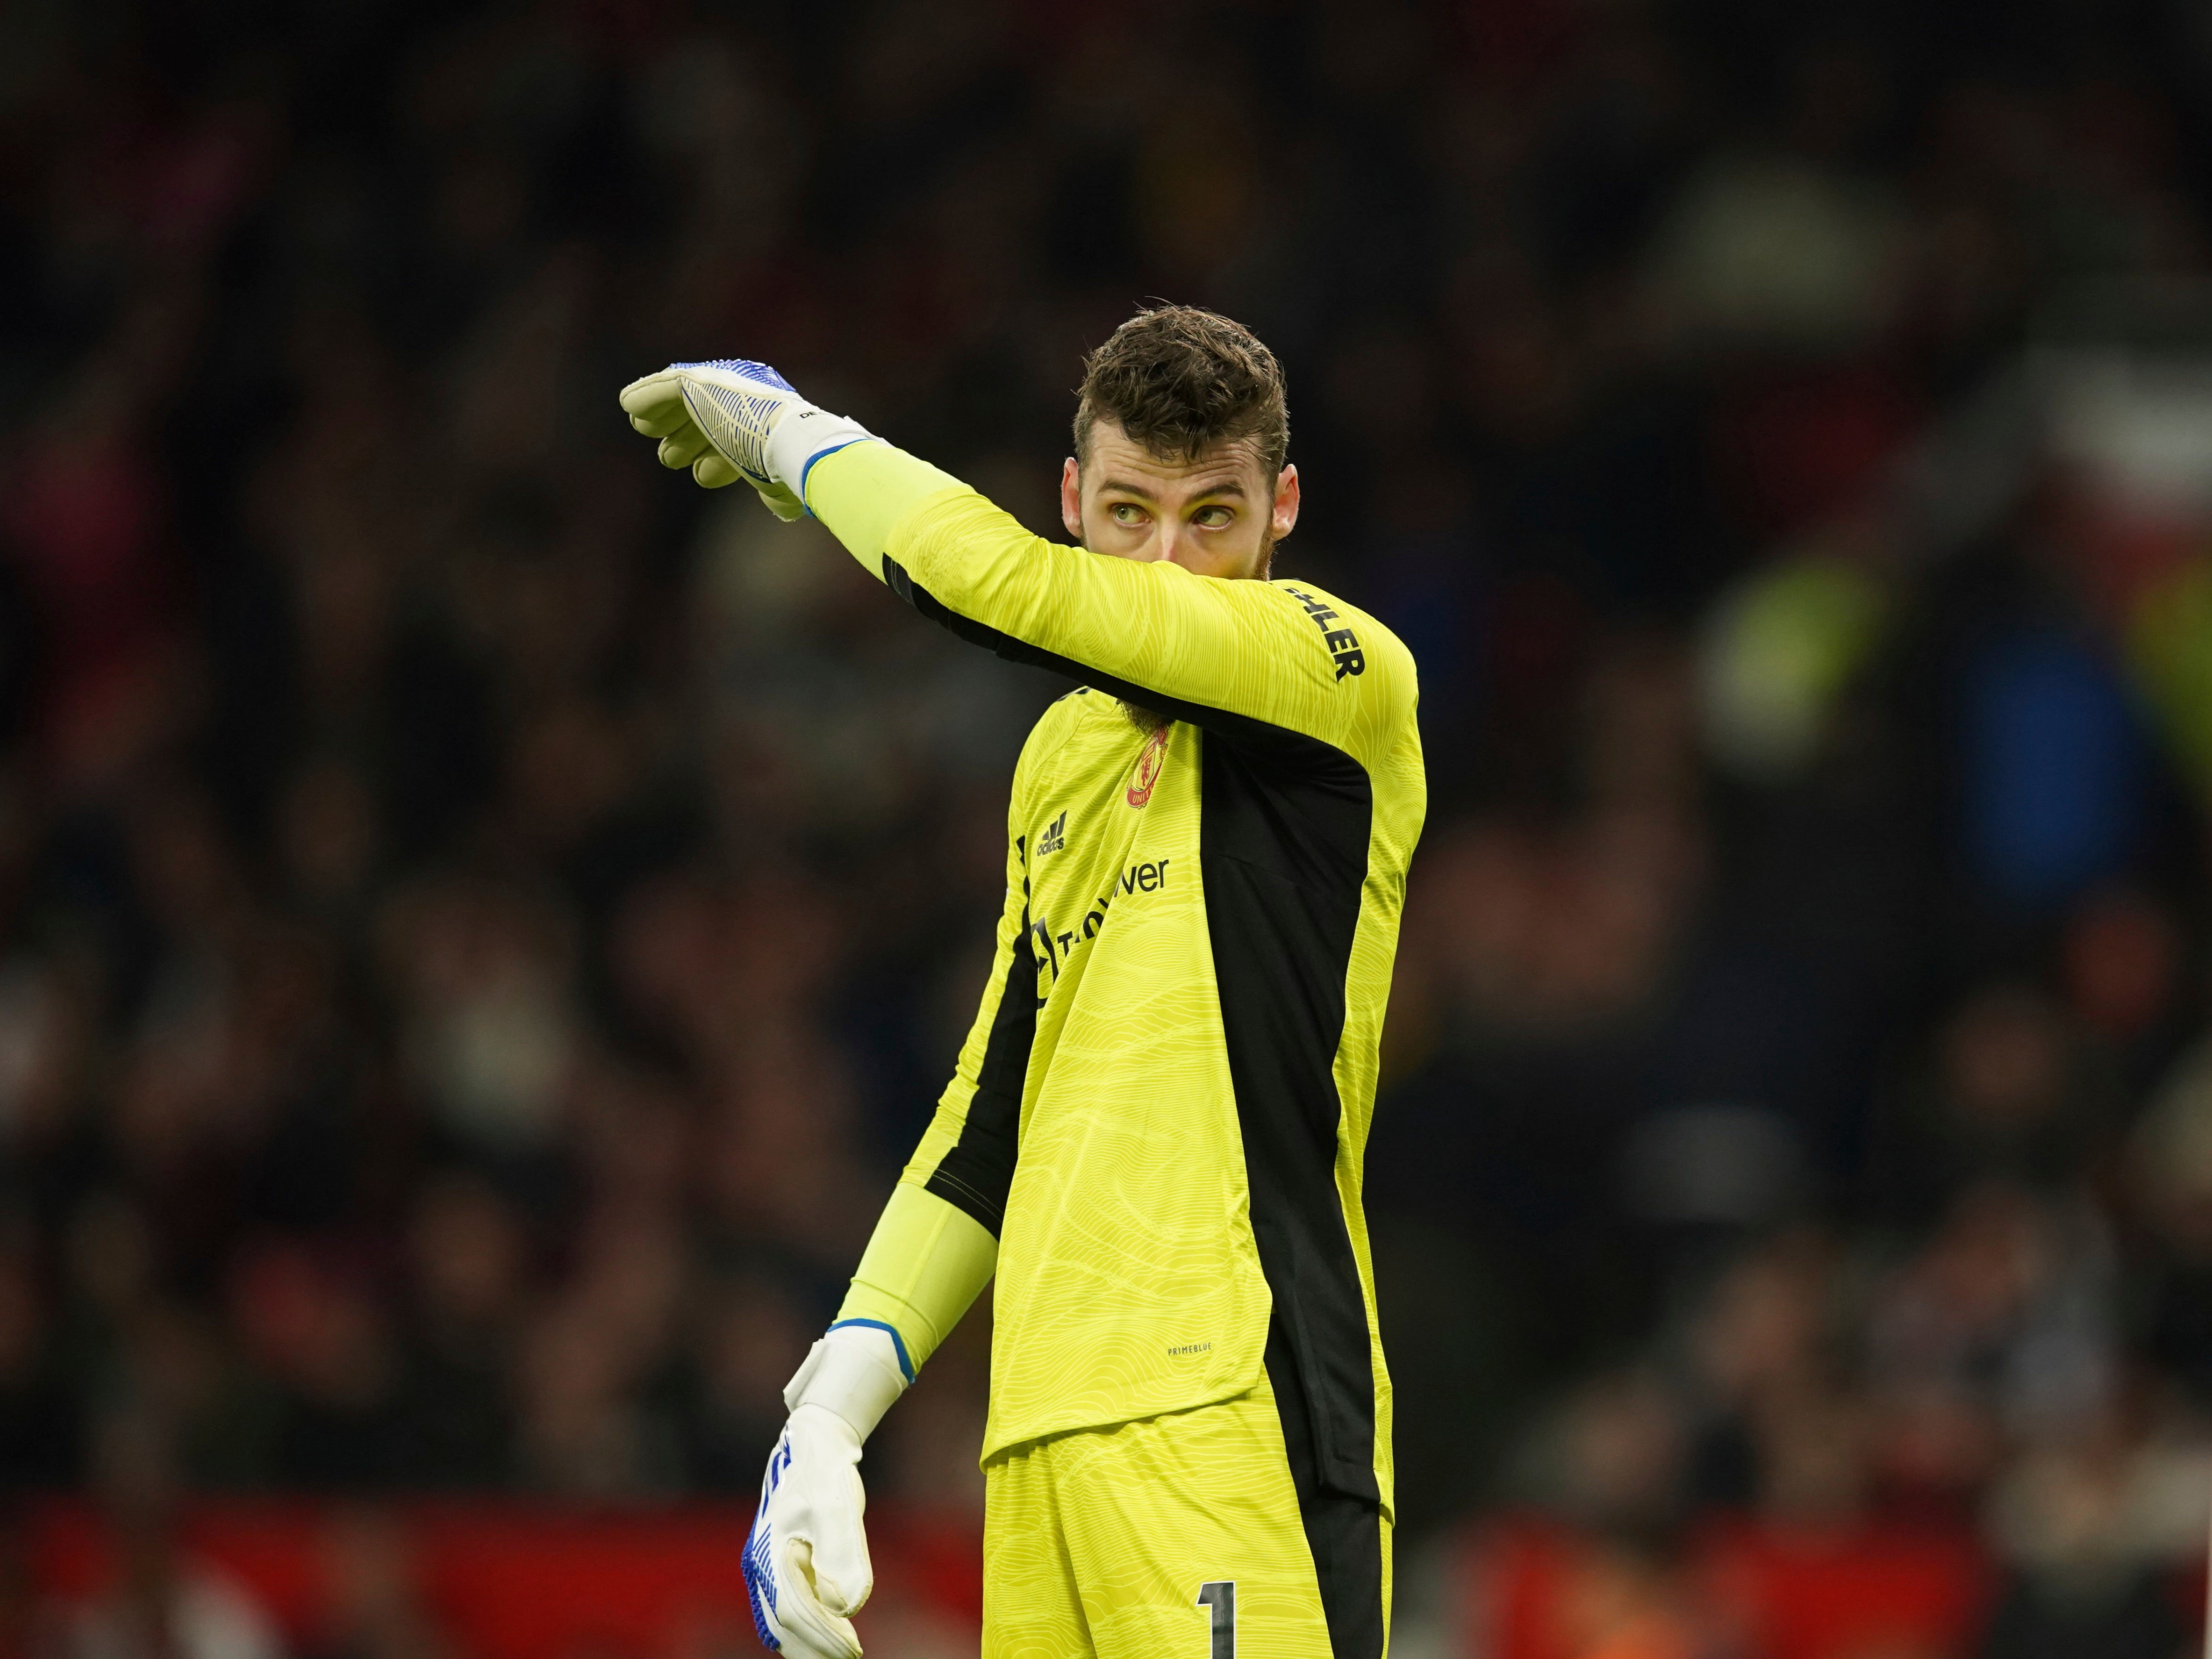 Manchester United's goalkeeper David de Gea gestures